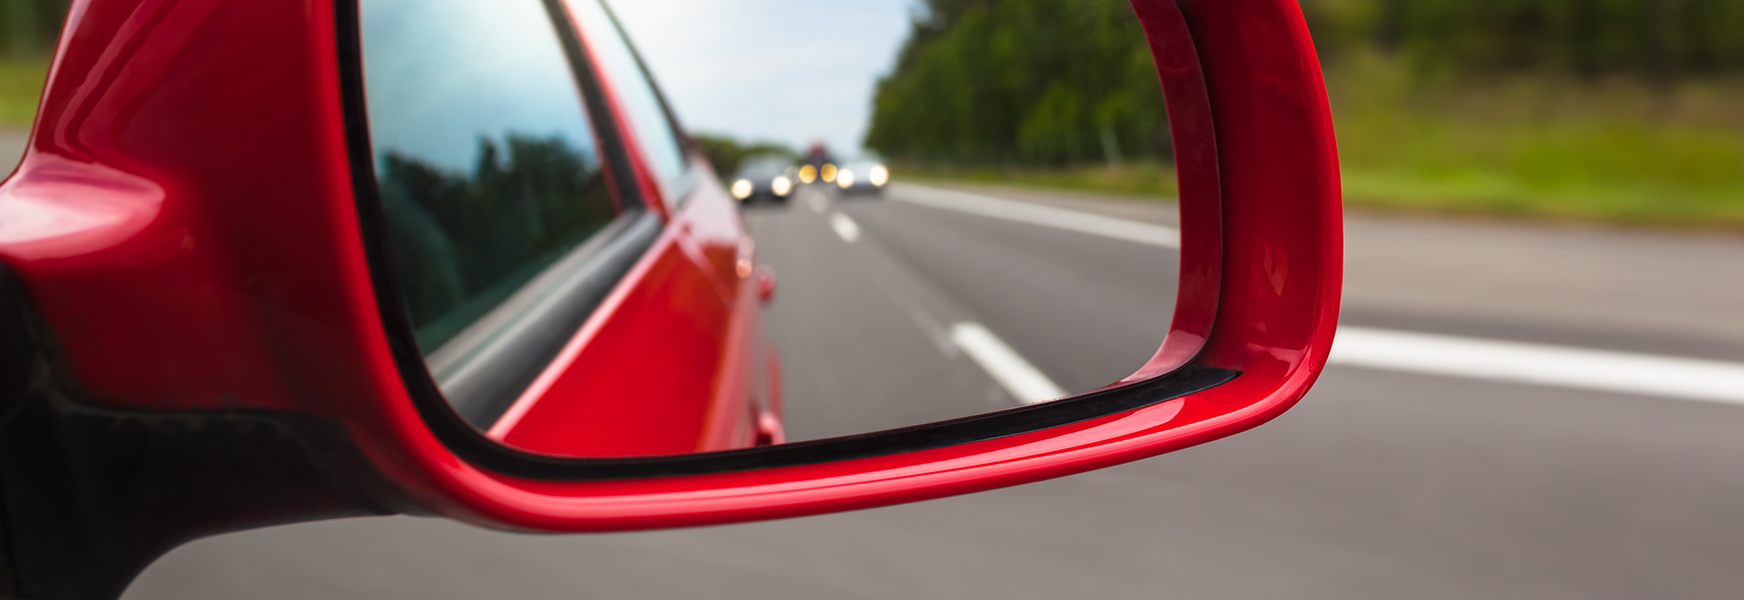 Automobile Mirror Adjustments to Eliminate Blind Spots